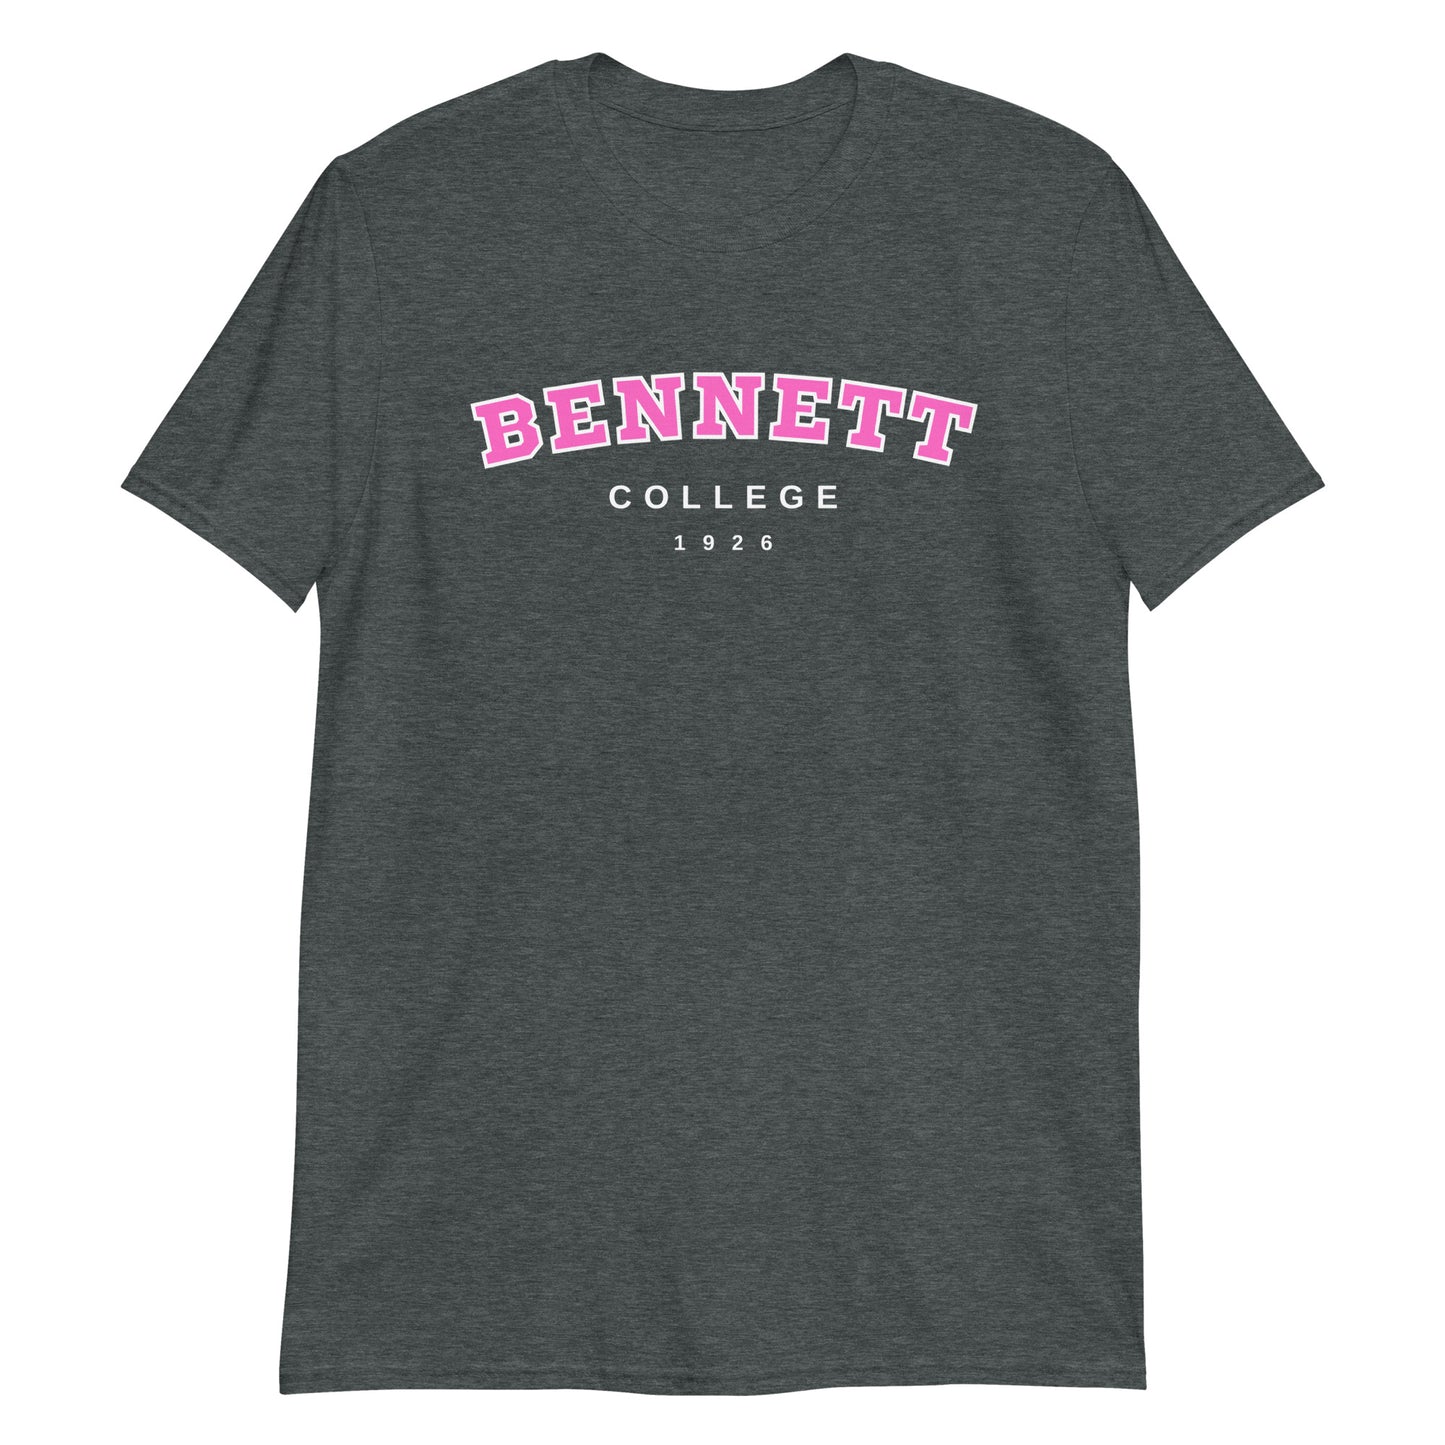 Breast Cancer Awareness Short-Sleeve Unisex T-Shirt